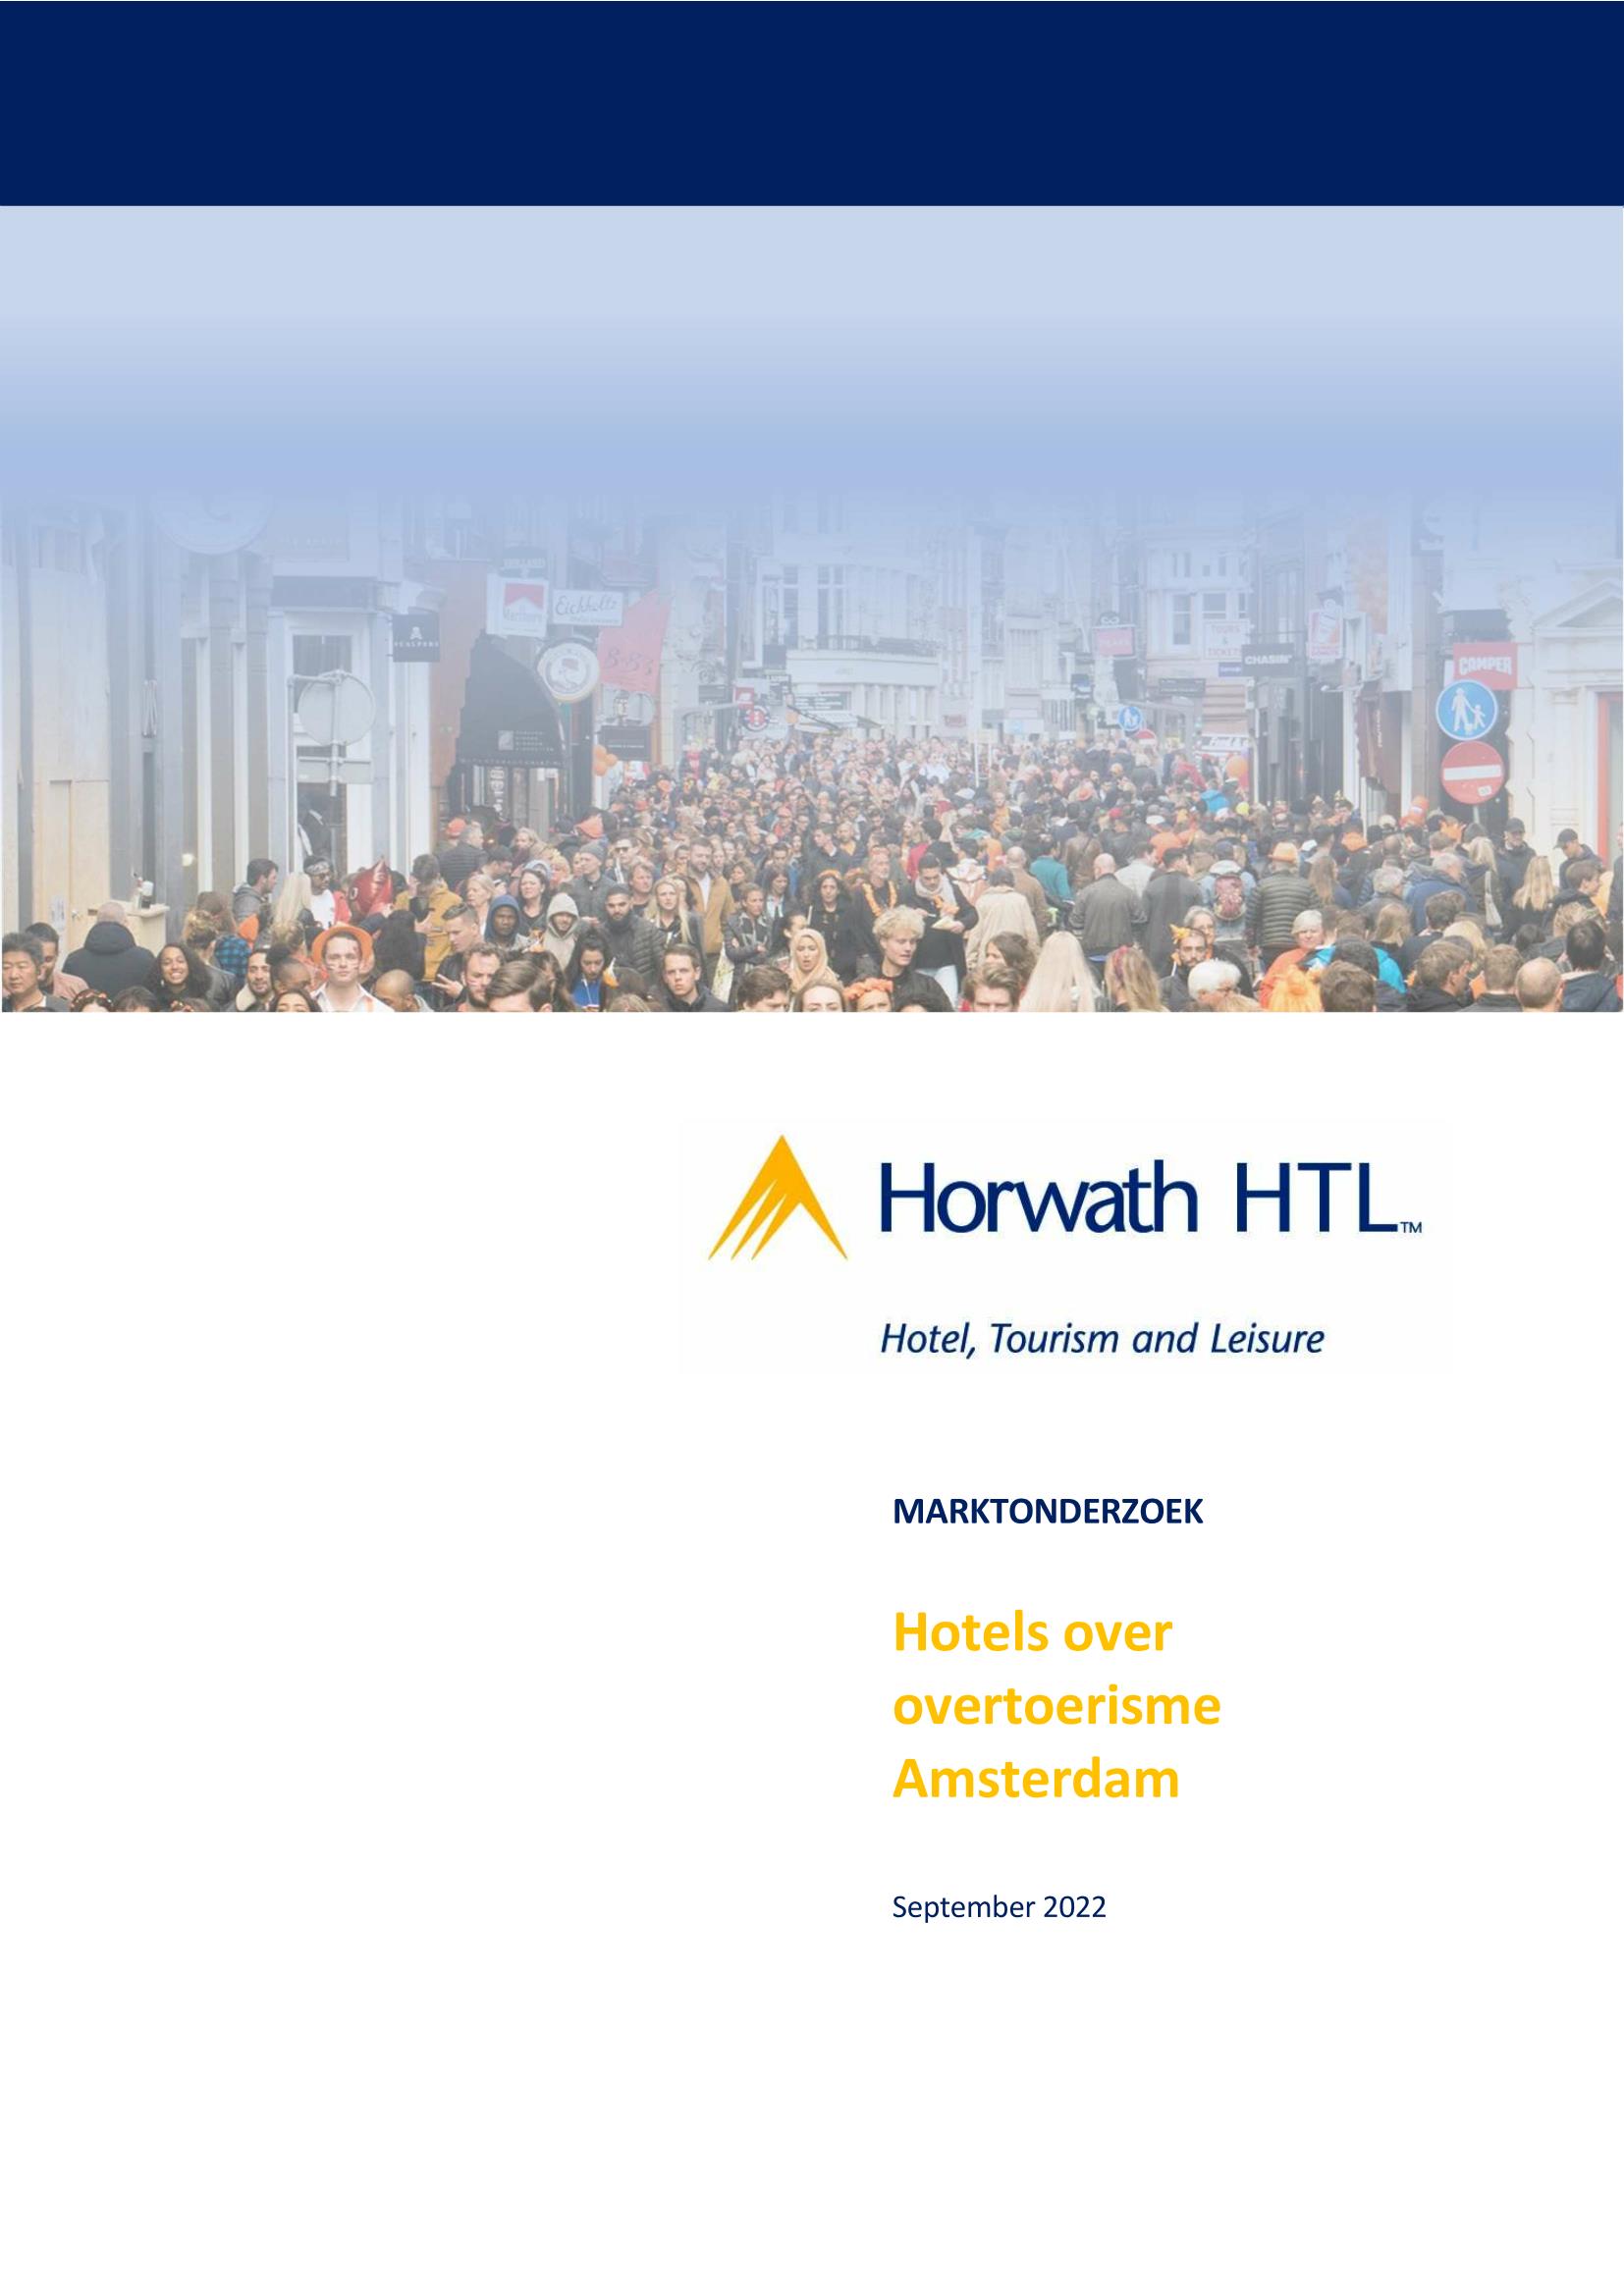 Horwath HTL Hotel Event 2022